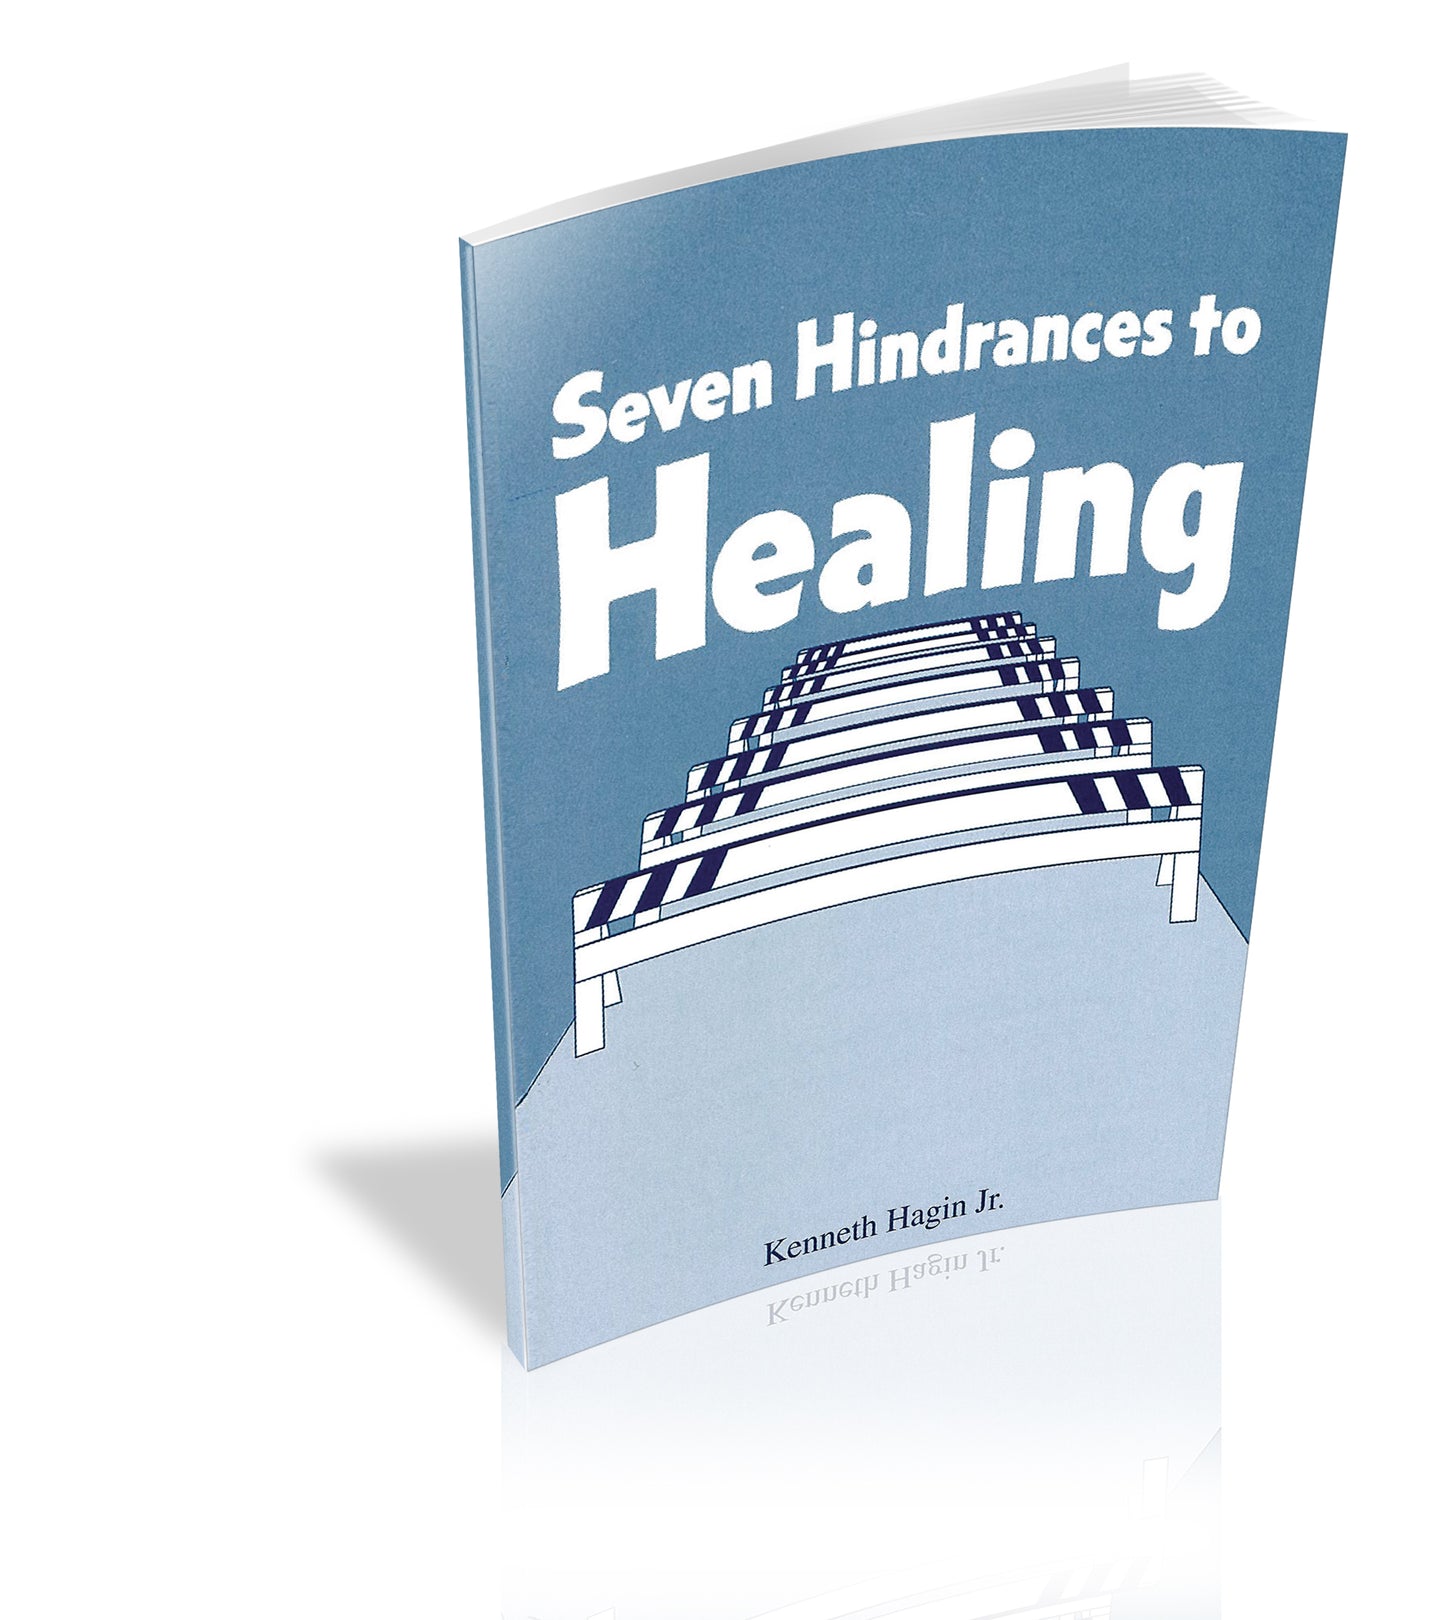 Seven Hindrances to Healing